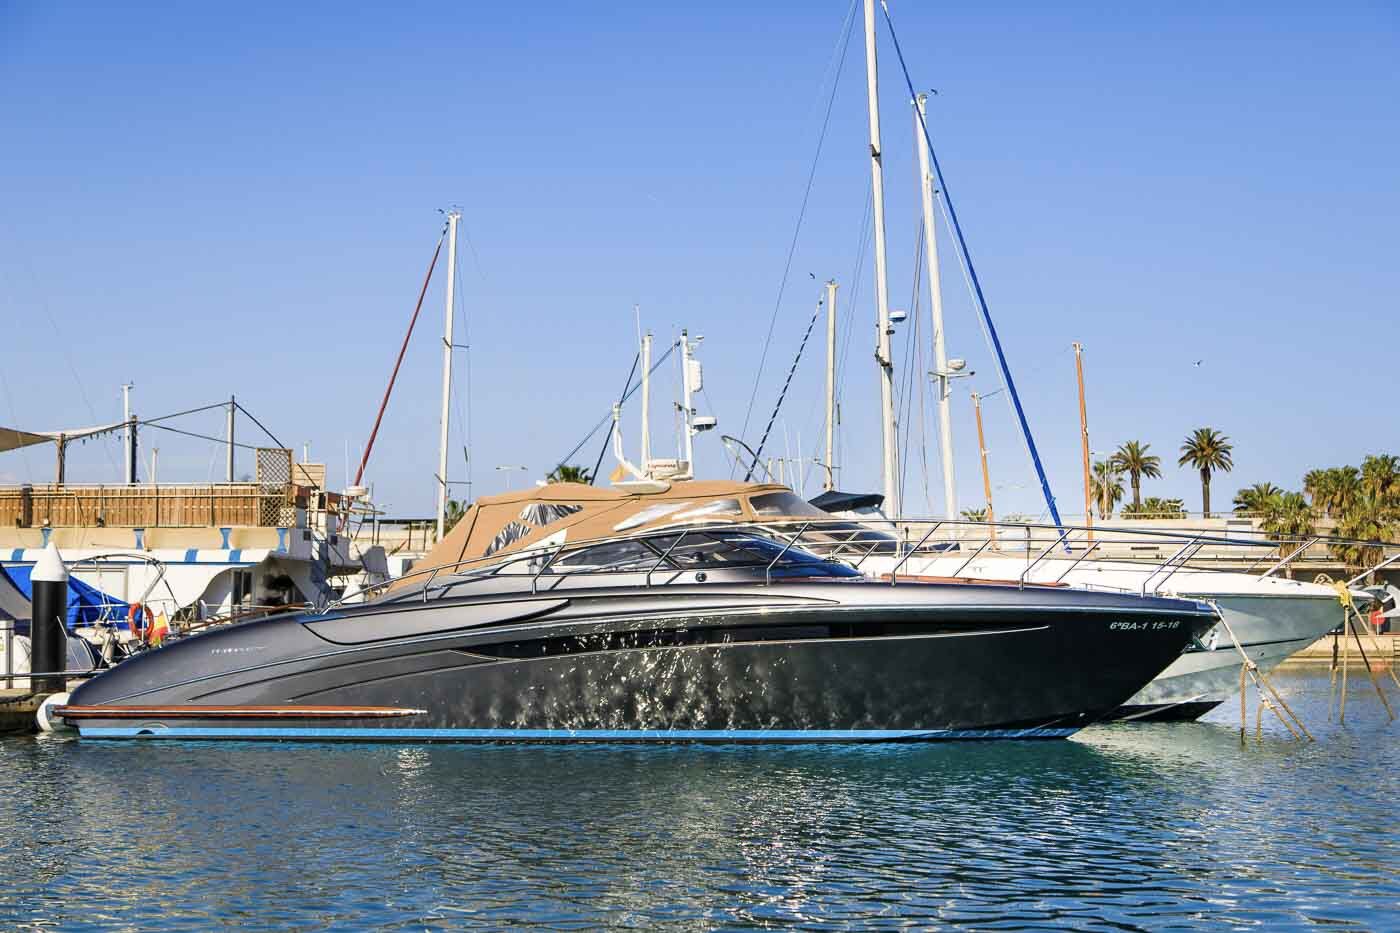 Power boat FOR CHARTER, year 2019 brand Riva and model Rivaraman Super 14m, available in Marina Port Vell Barcelona Barcelona España